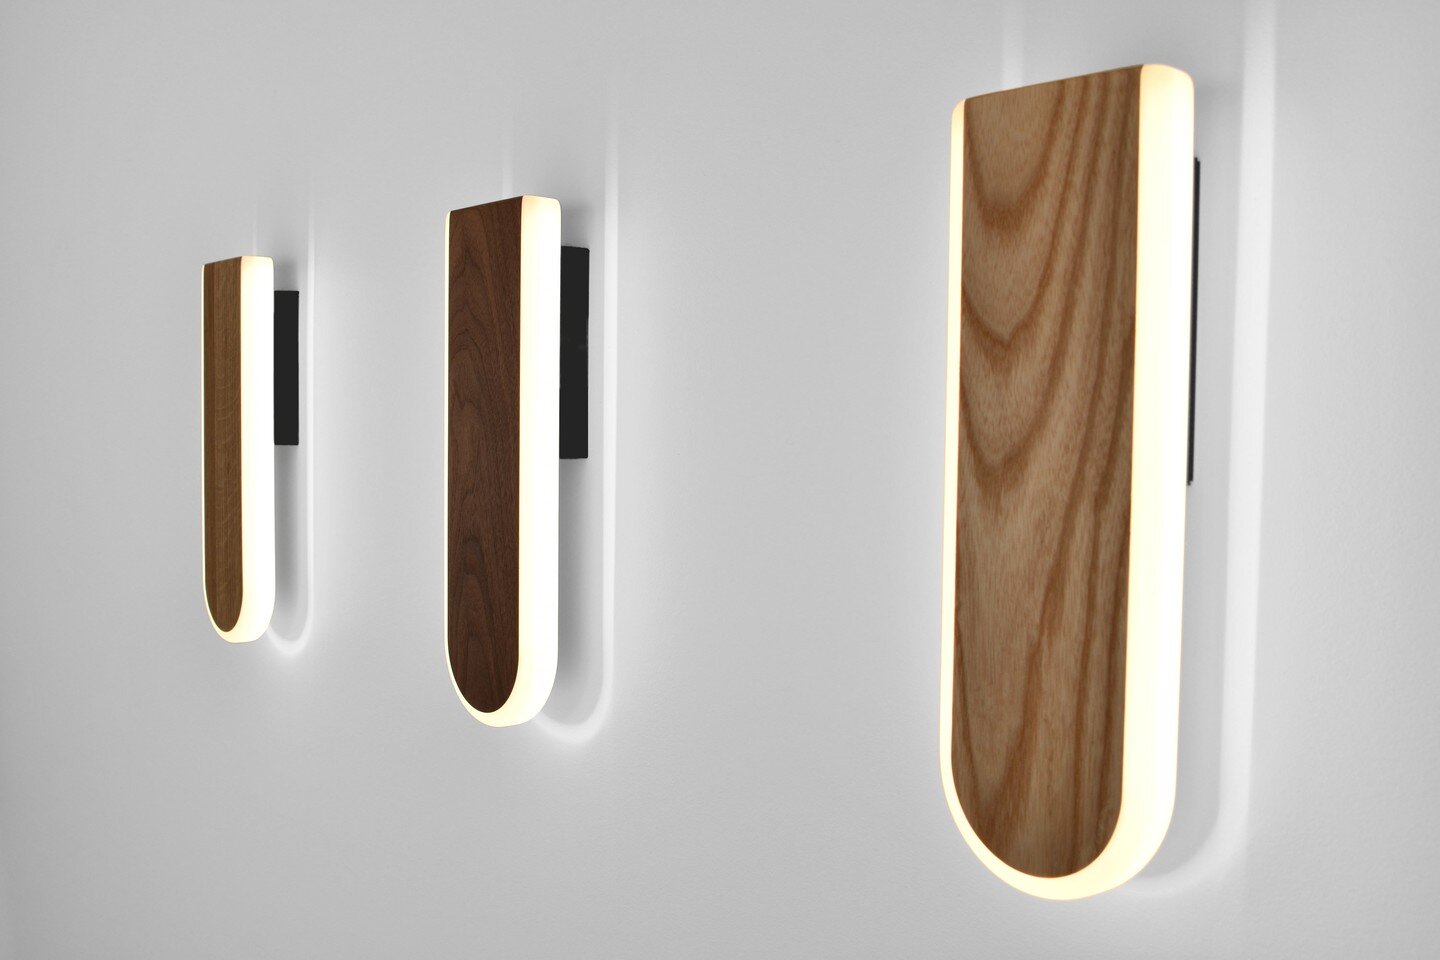 Meet Ovi - it puts a smile on your wall:)
.
.
.
.
.
.
.
.
#lighting #lightingdesign #woodworking #interiordesign